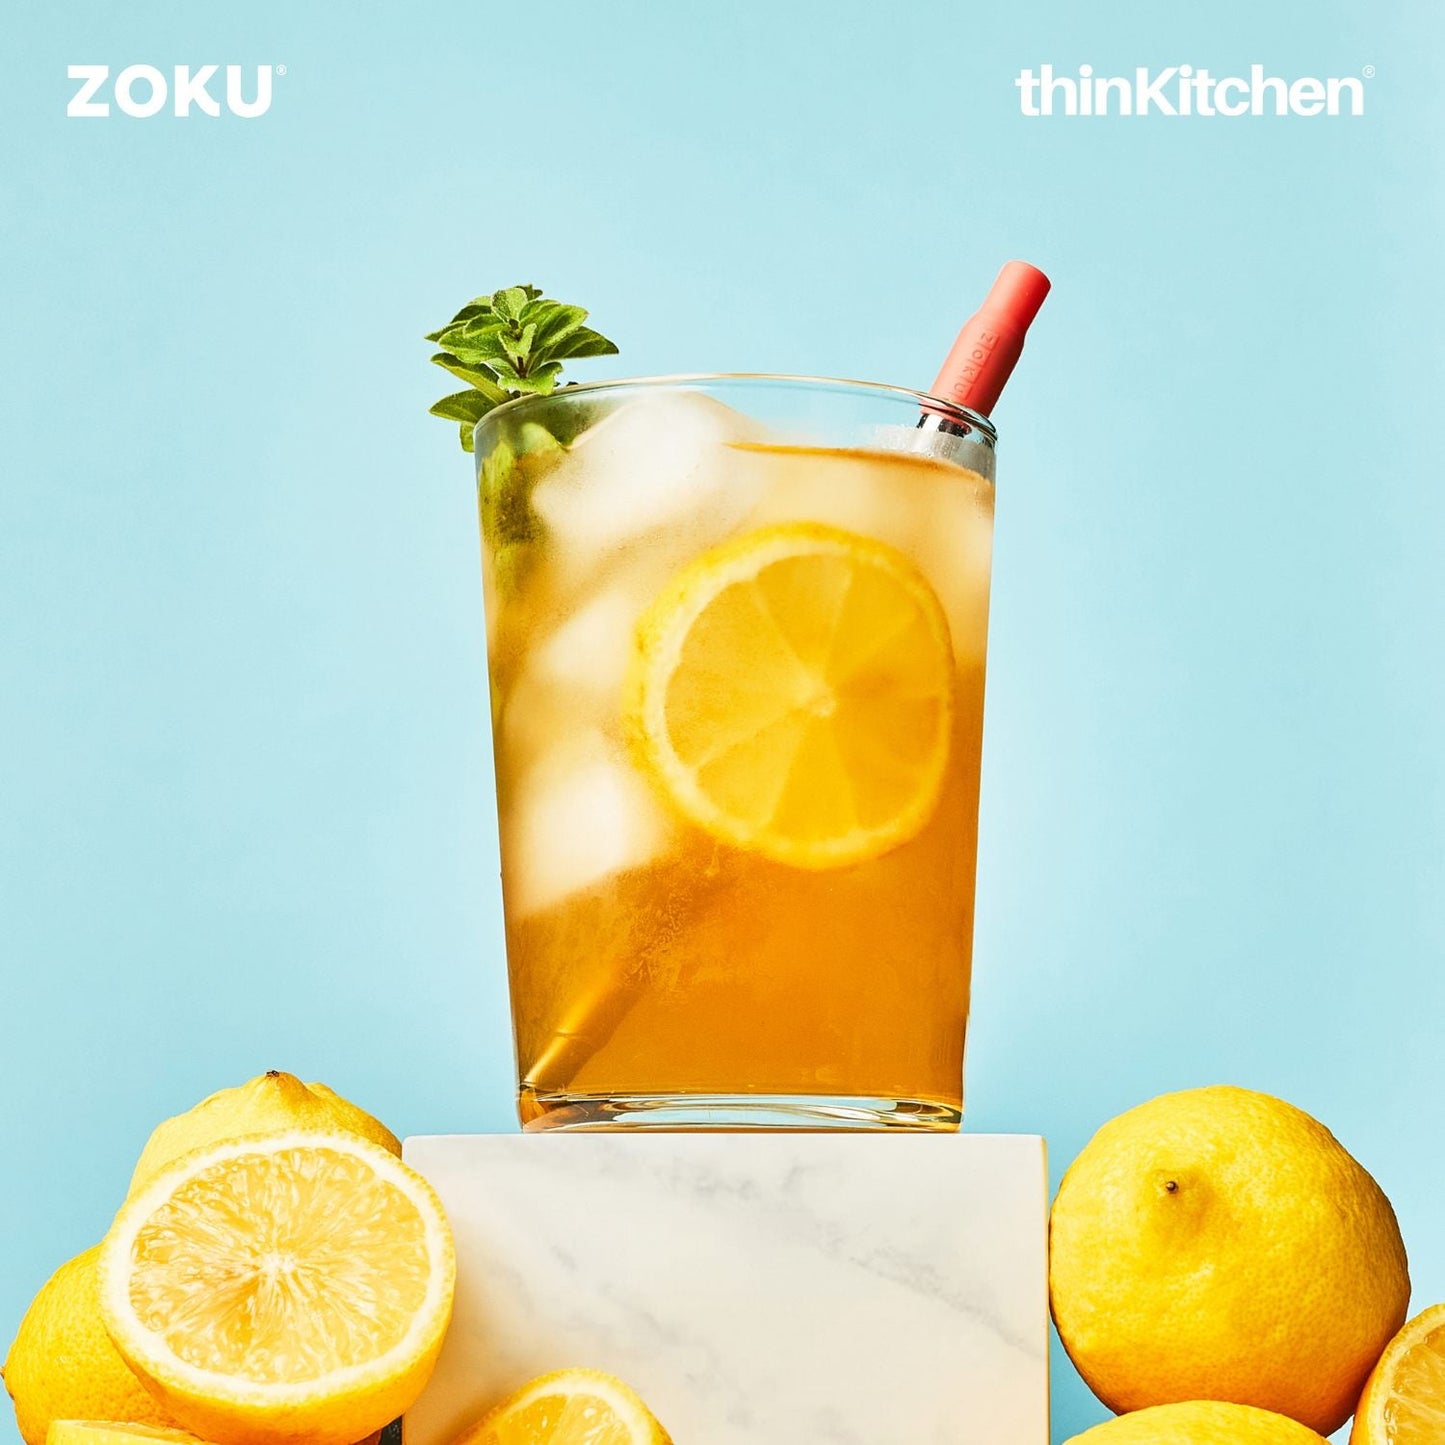 thinKitchen™ Zoku Red Two Tone Pocket Straw